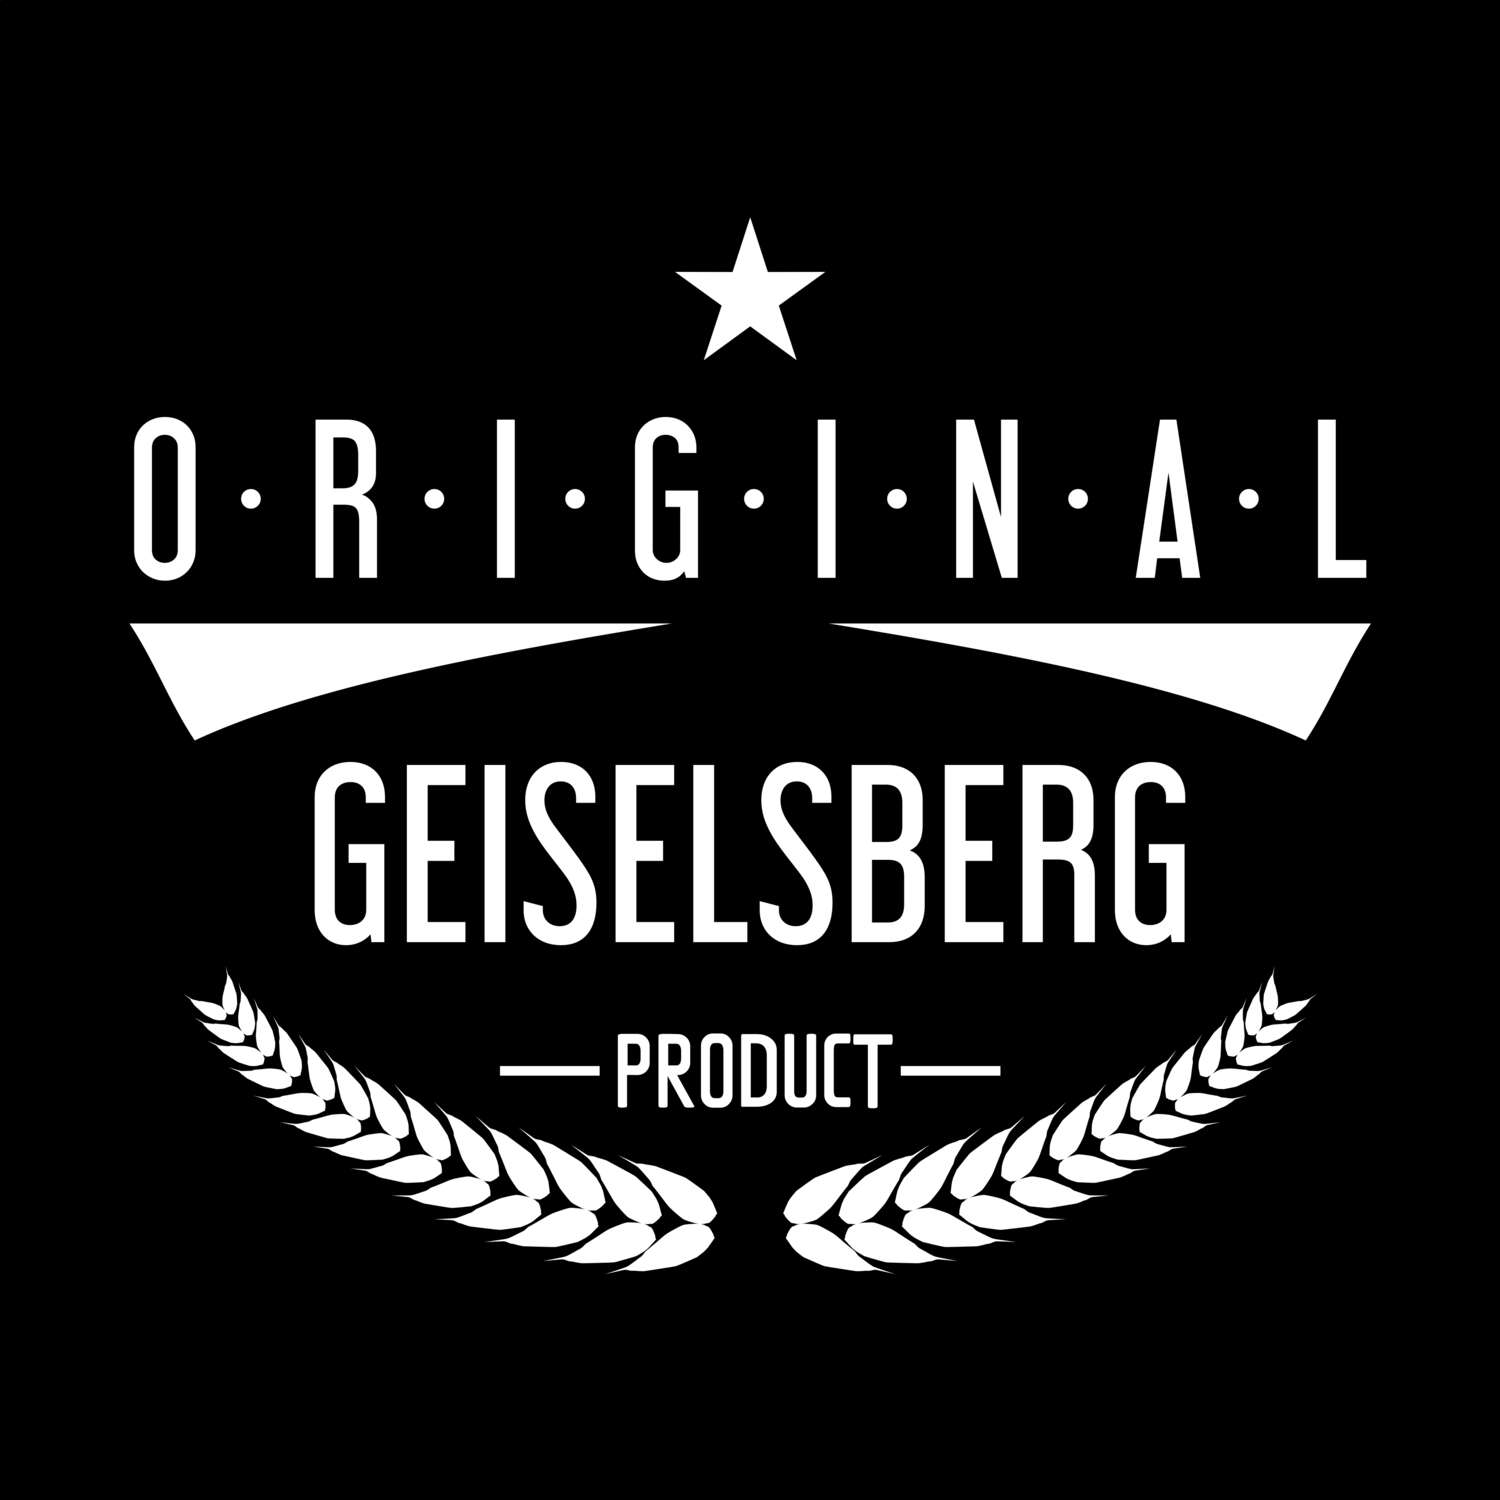 Geiselsberg T-Shirt »Original Product«